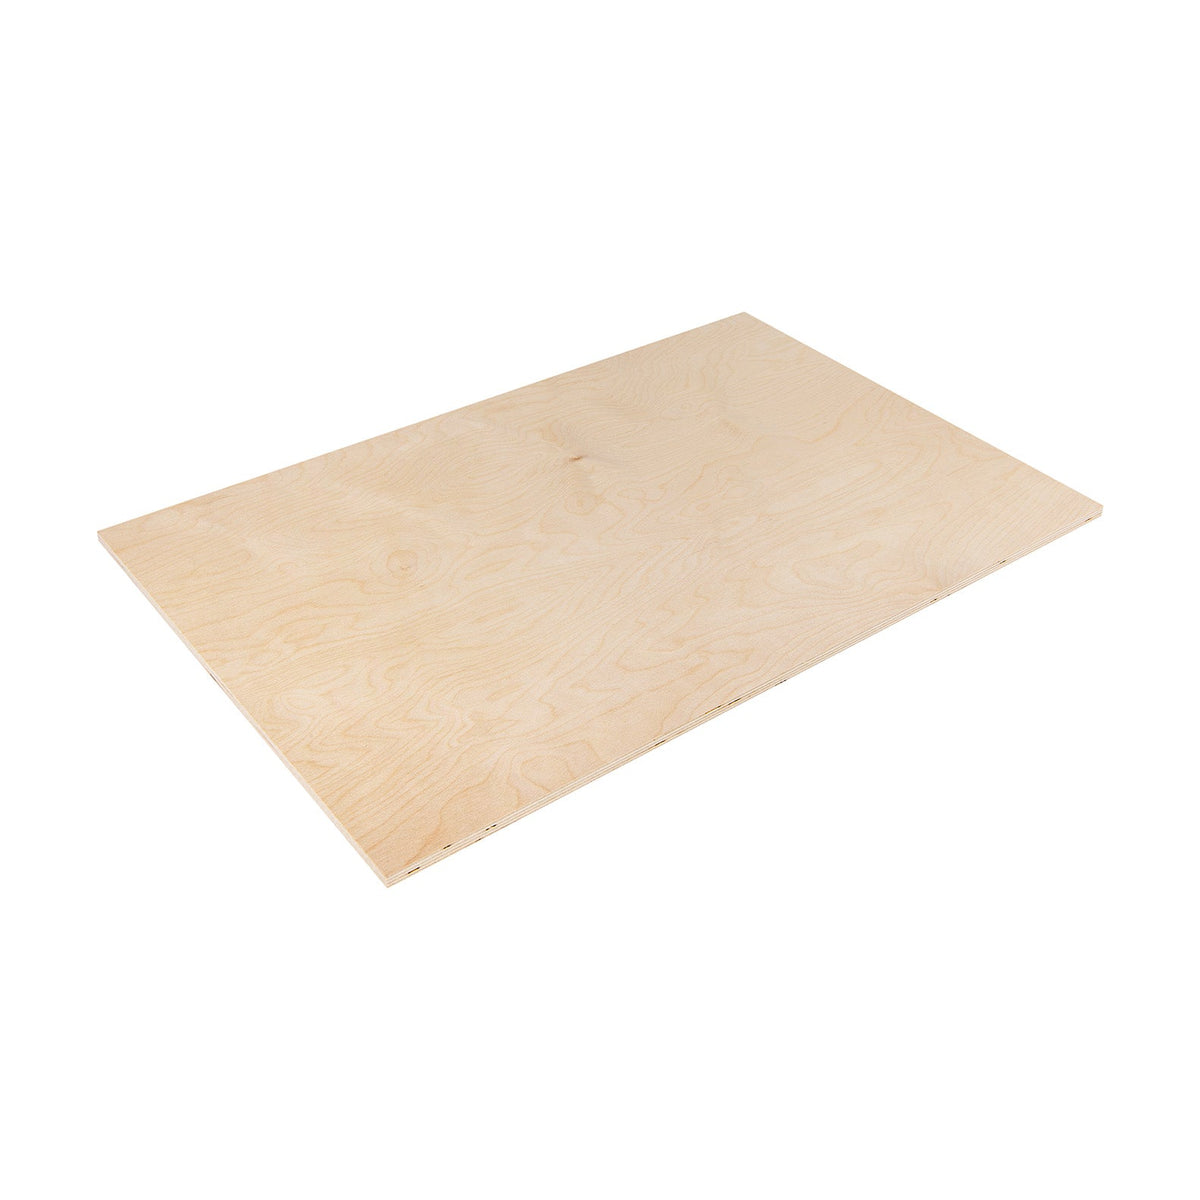 Deska za gnetenje peciva iz brezovega lesa - 90X51 cm